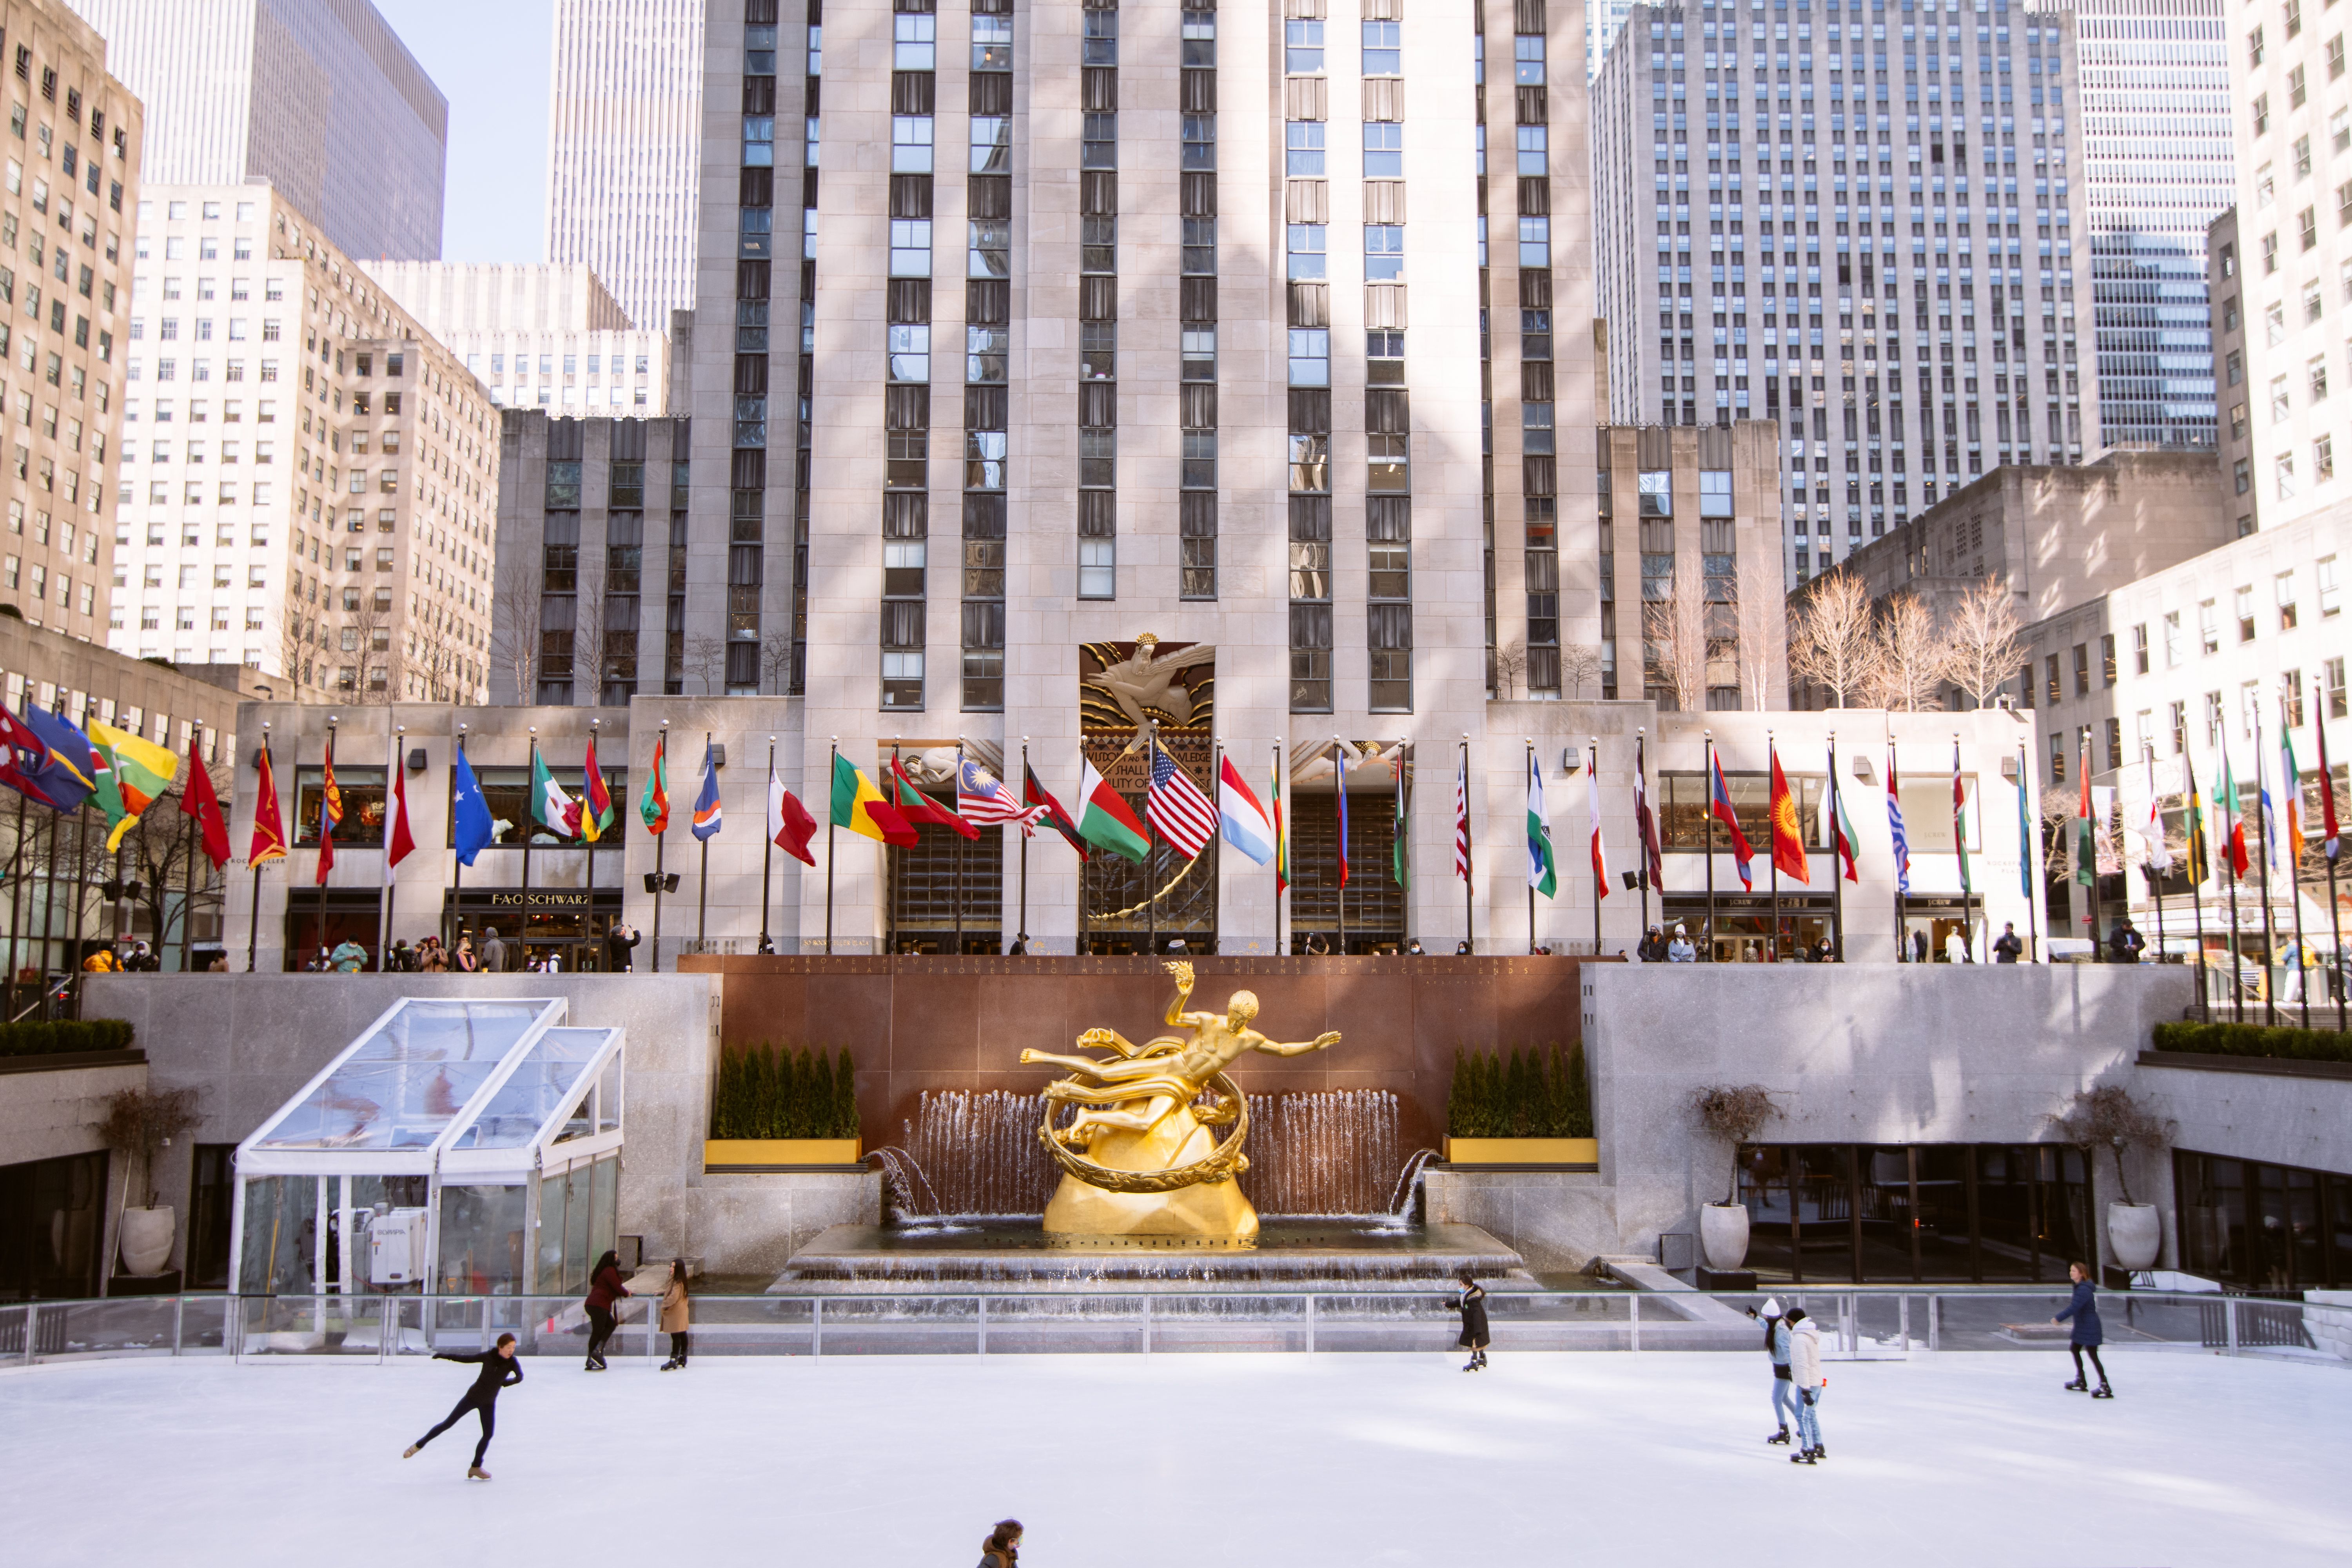 50+ Free Rockefeller Center & New York Images - Pixabay